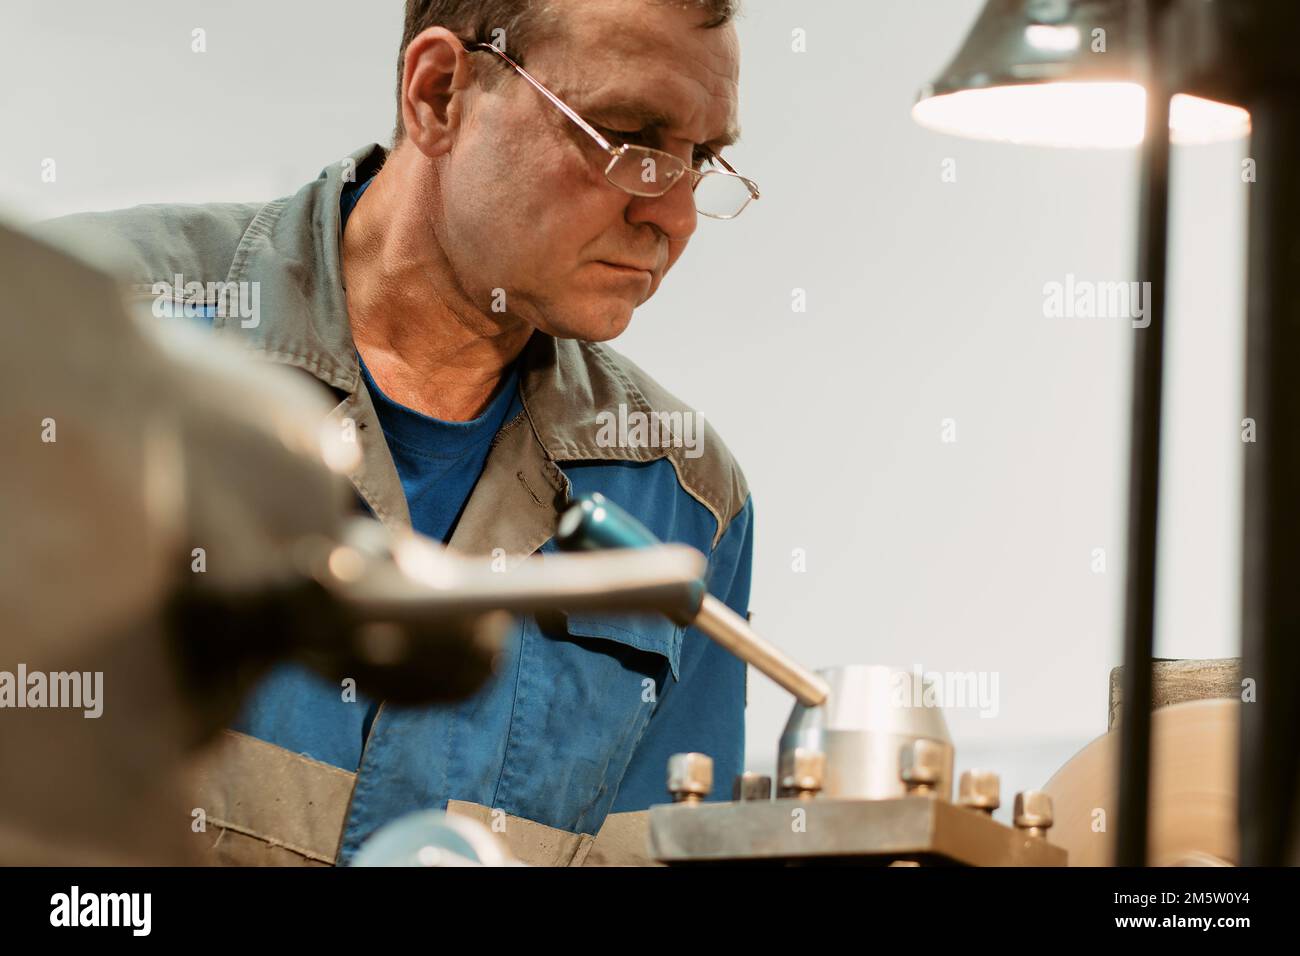 Portrait of turner with glasses 50-55 years old at work. Elderly metal turner works in workshop on machine behind job.. Stock Photo